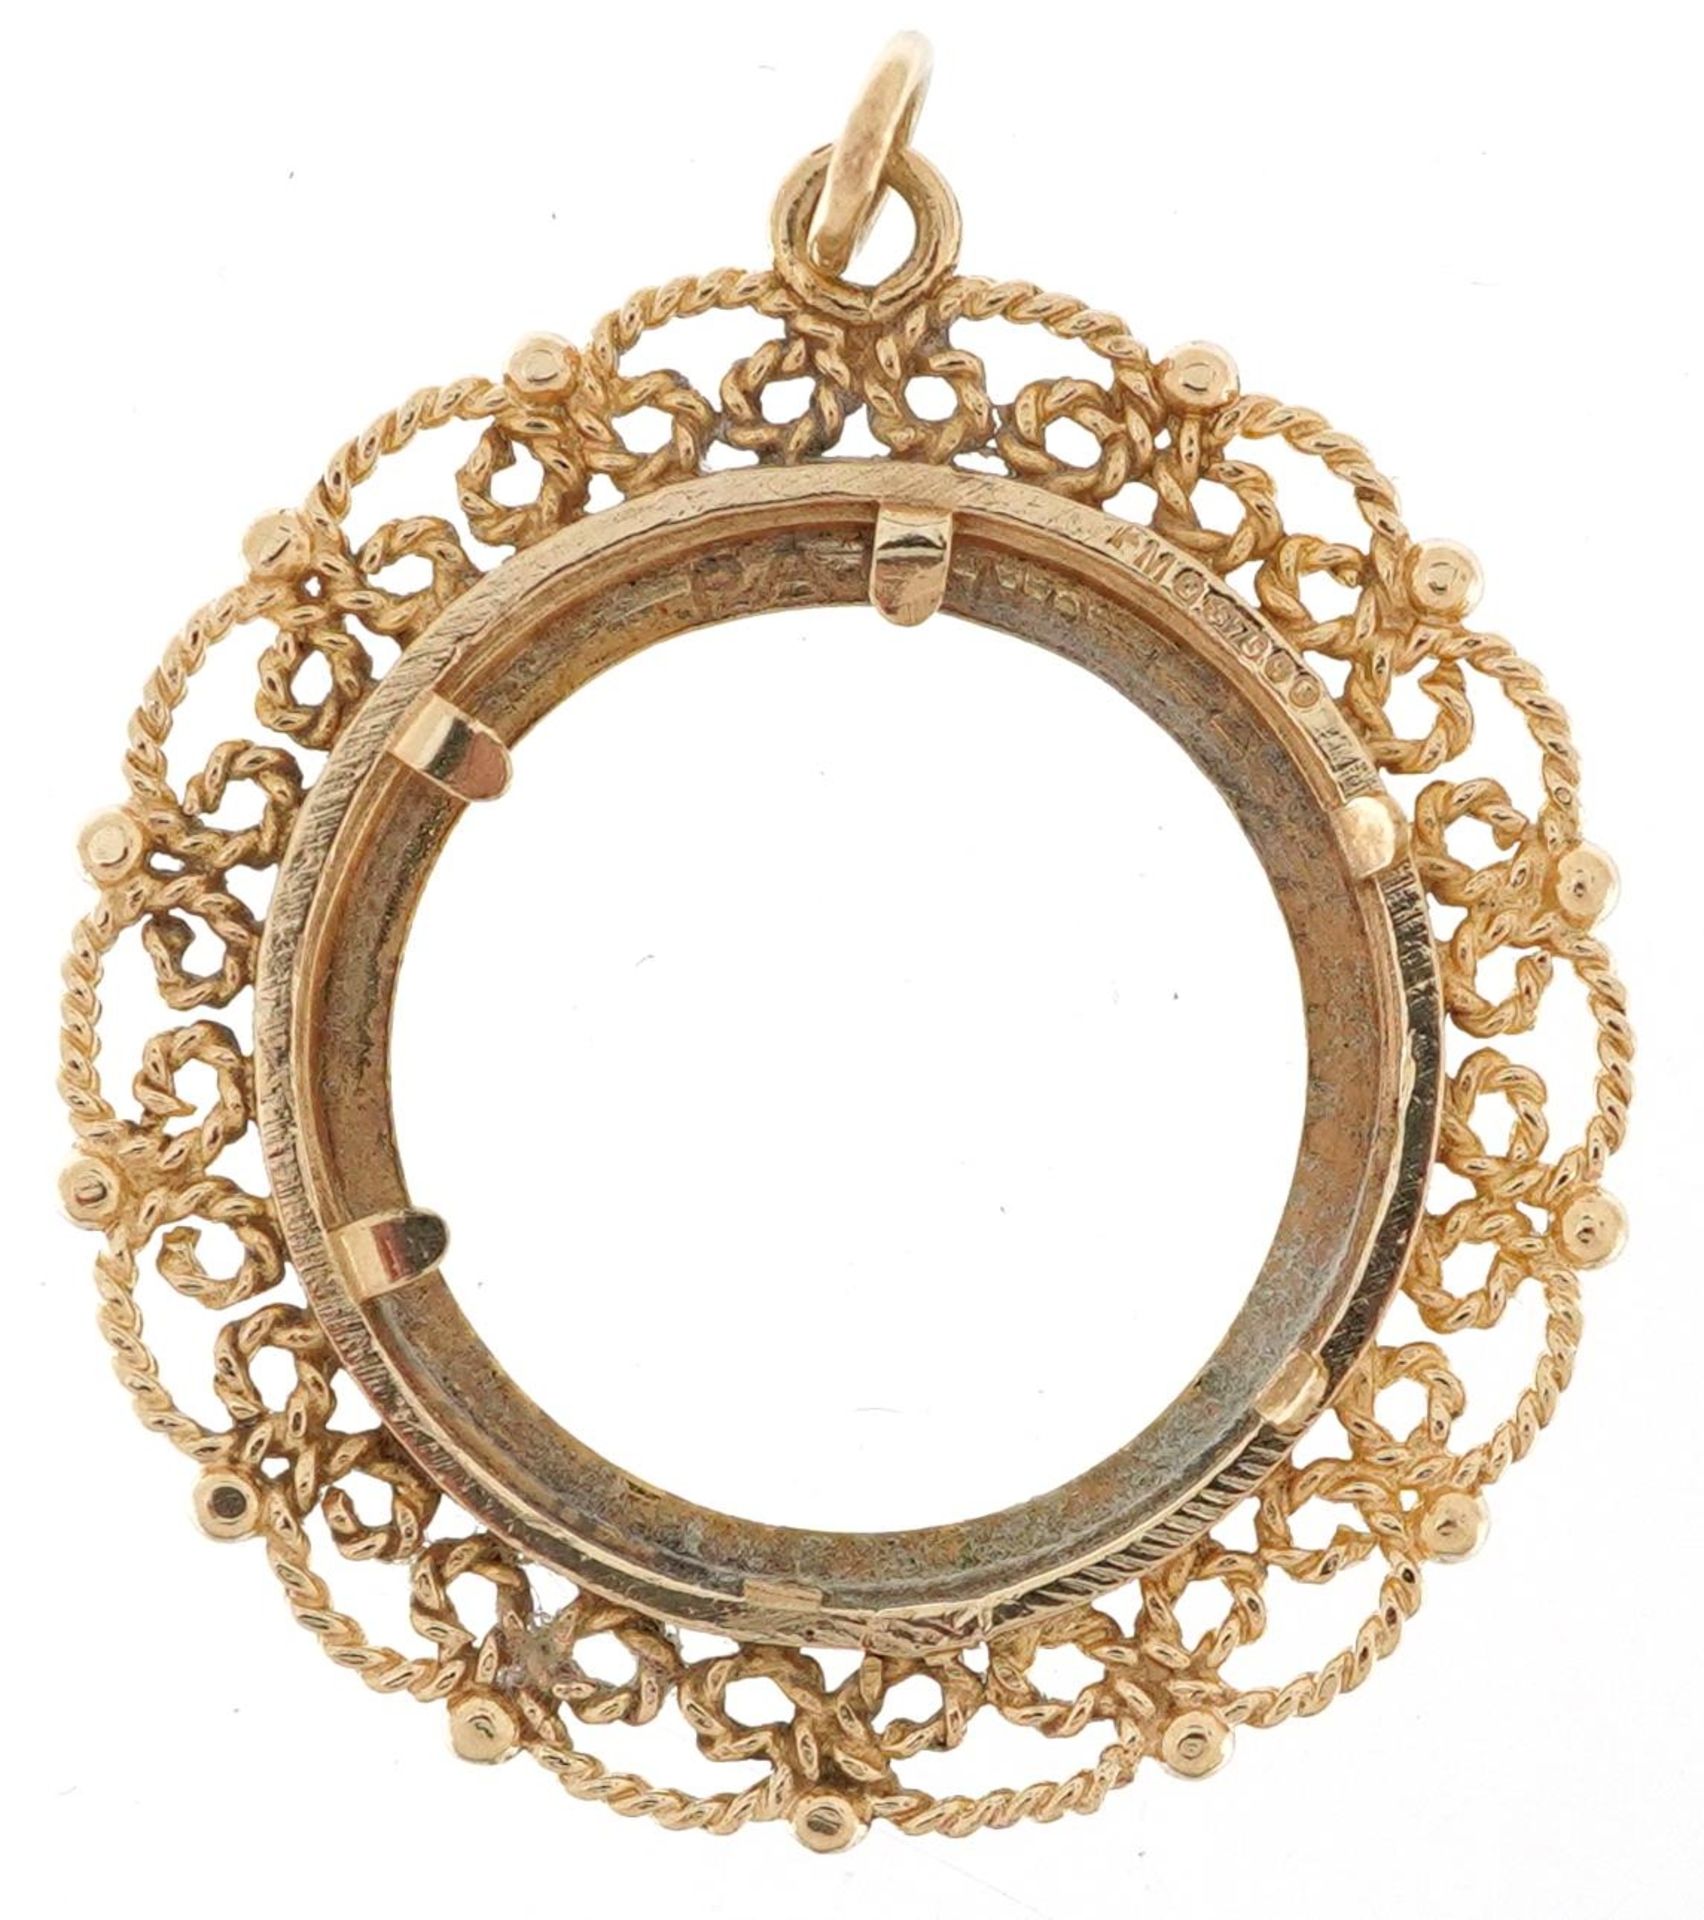 9ct gold rope twist design half sovereign pendant mount, 3cm in diameter, 3.1g - Image 2 of 3